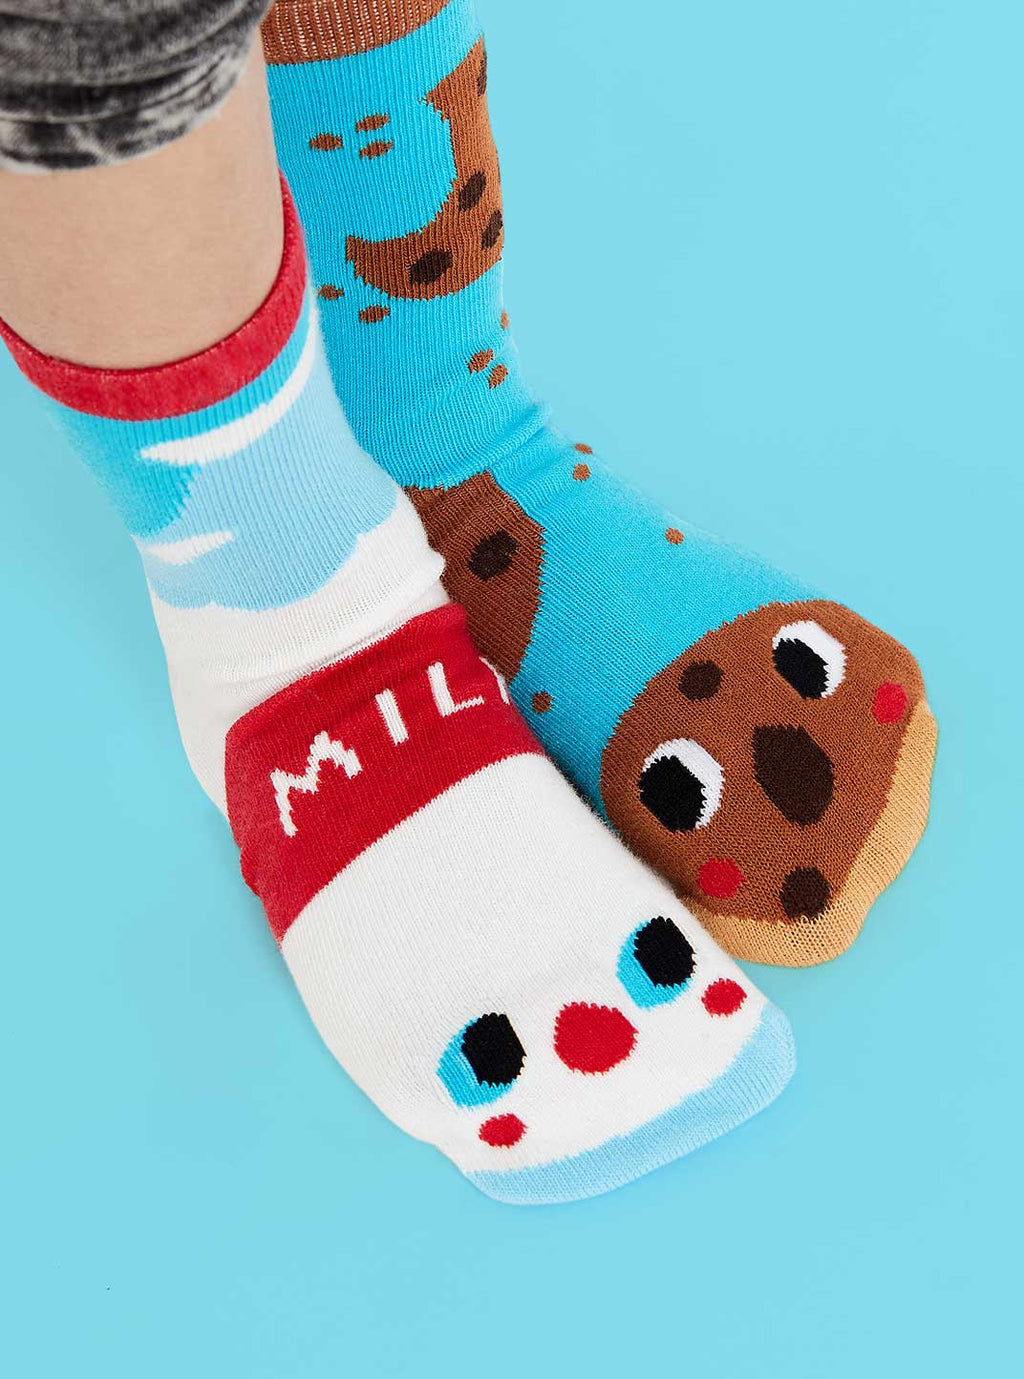 Pals Socks - Milk & Cookies | Kids Socks | Collectible Mismatched Socks